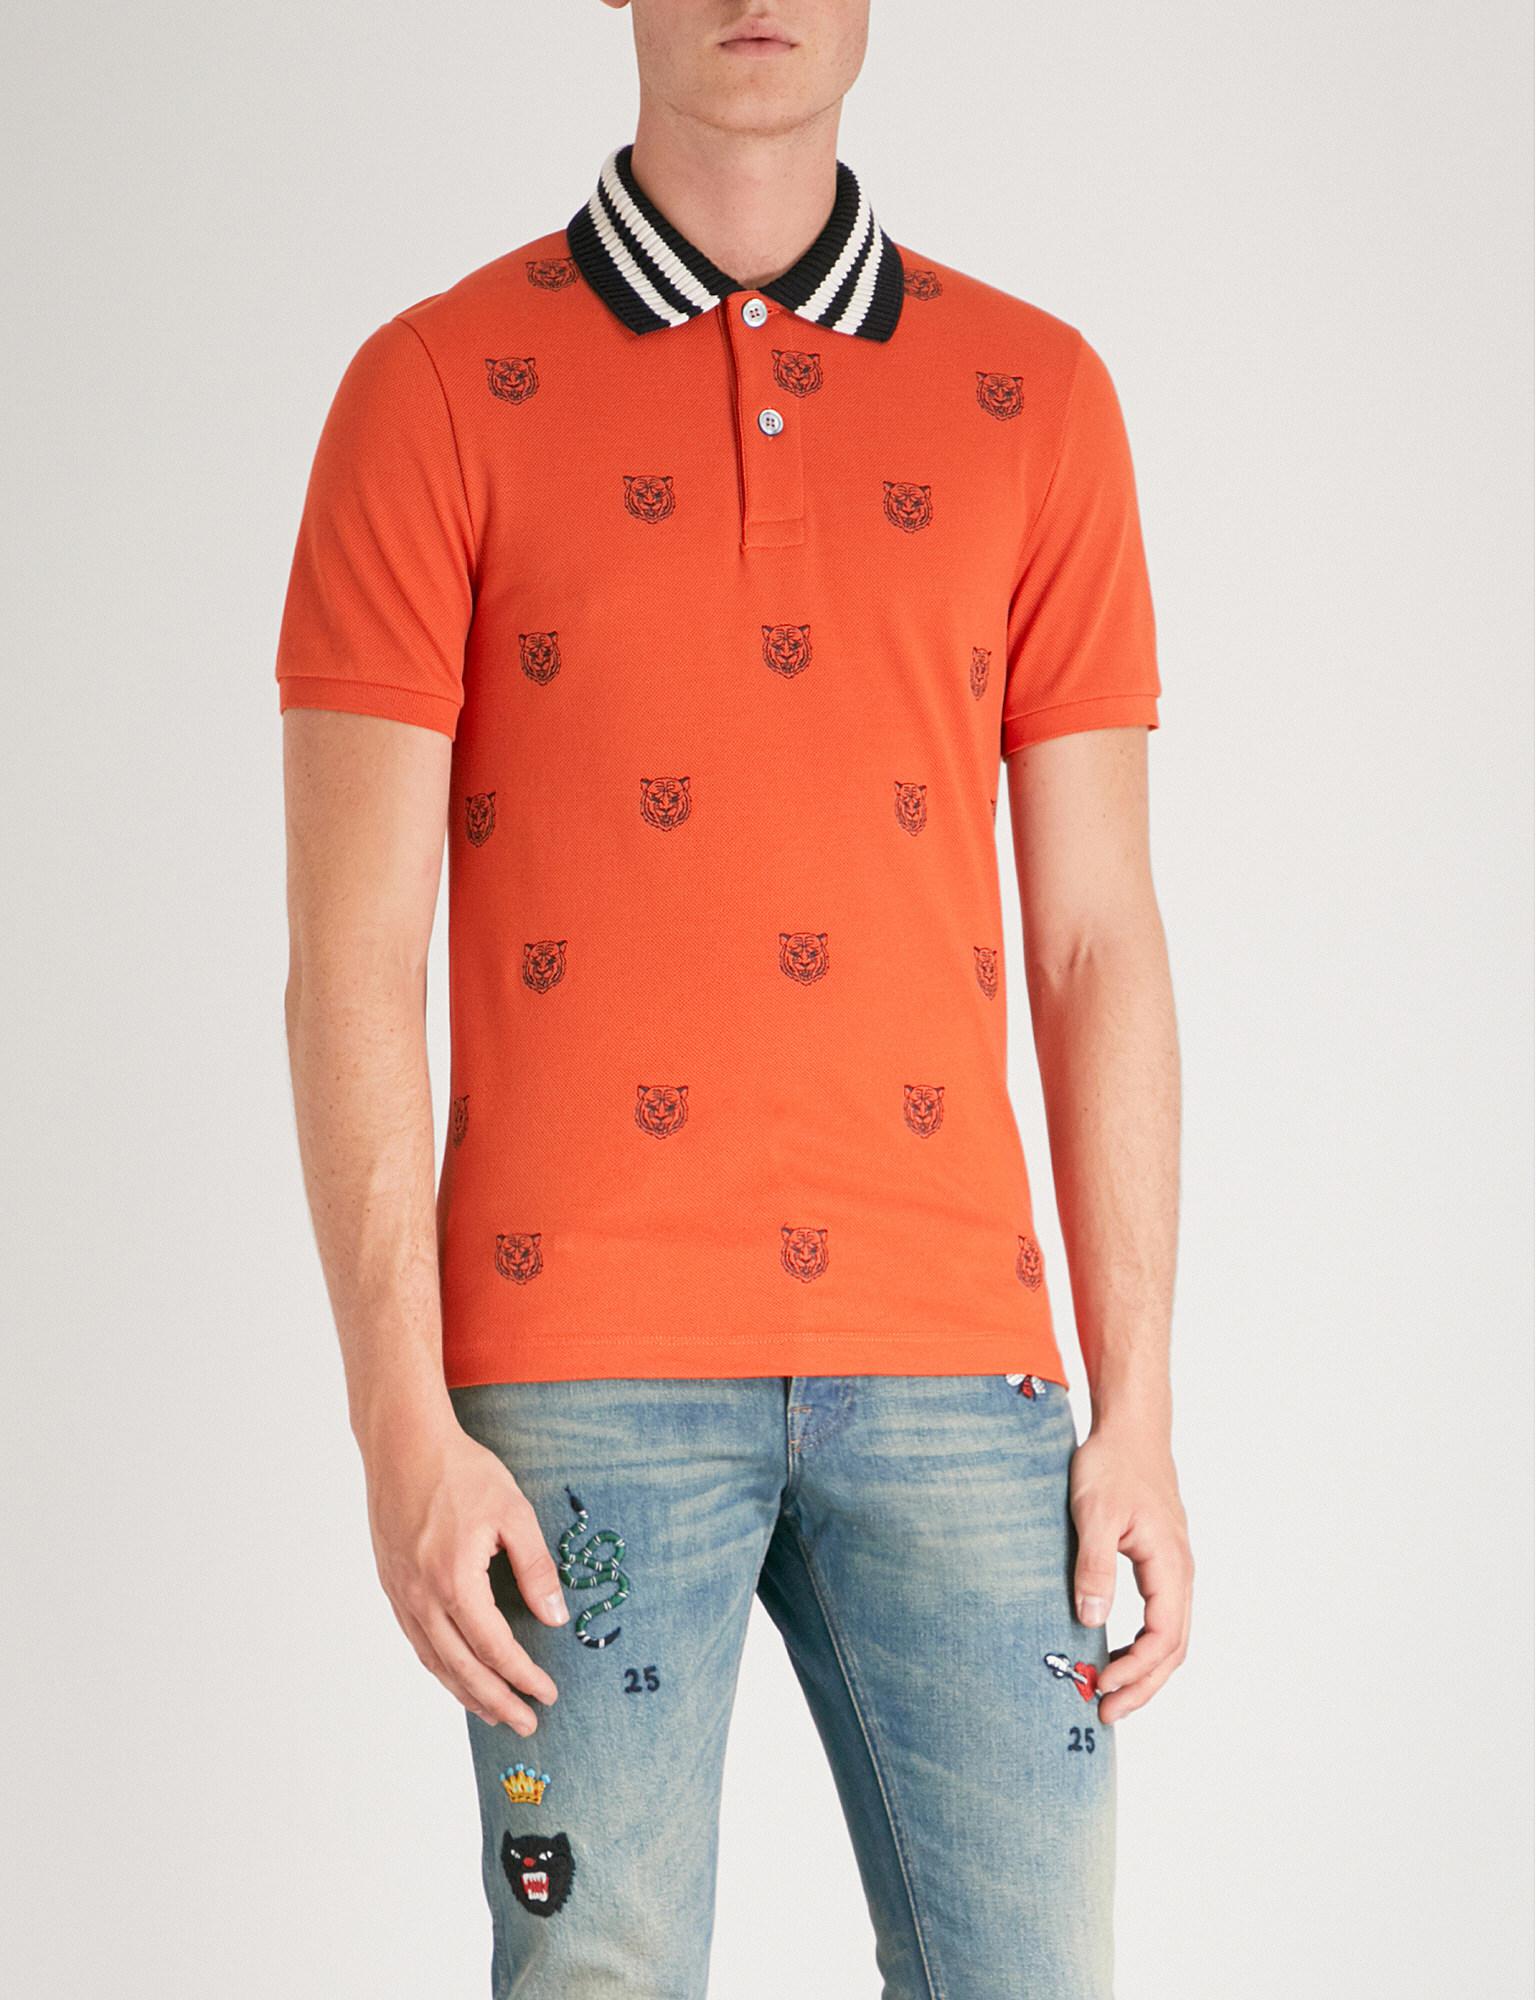 Gucci Cotton-pique Polo Shirt in Orange for Men - Lyst